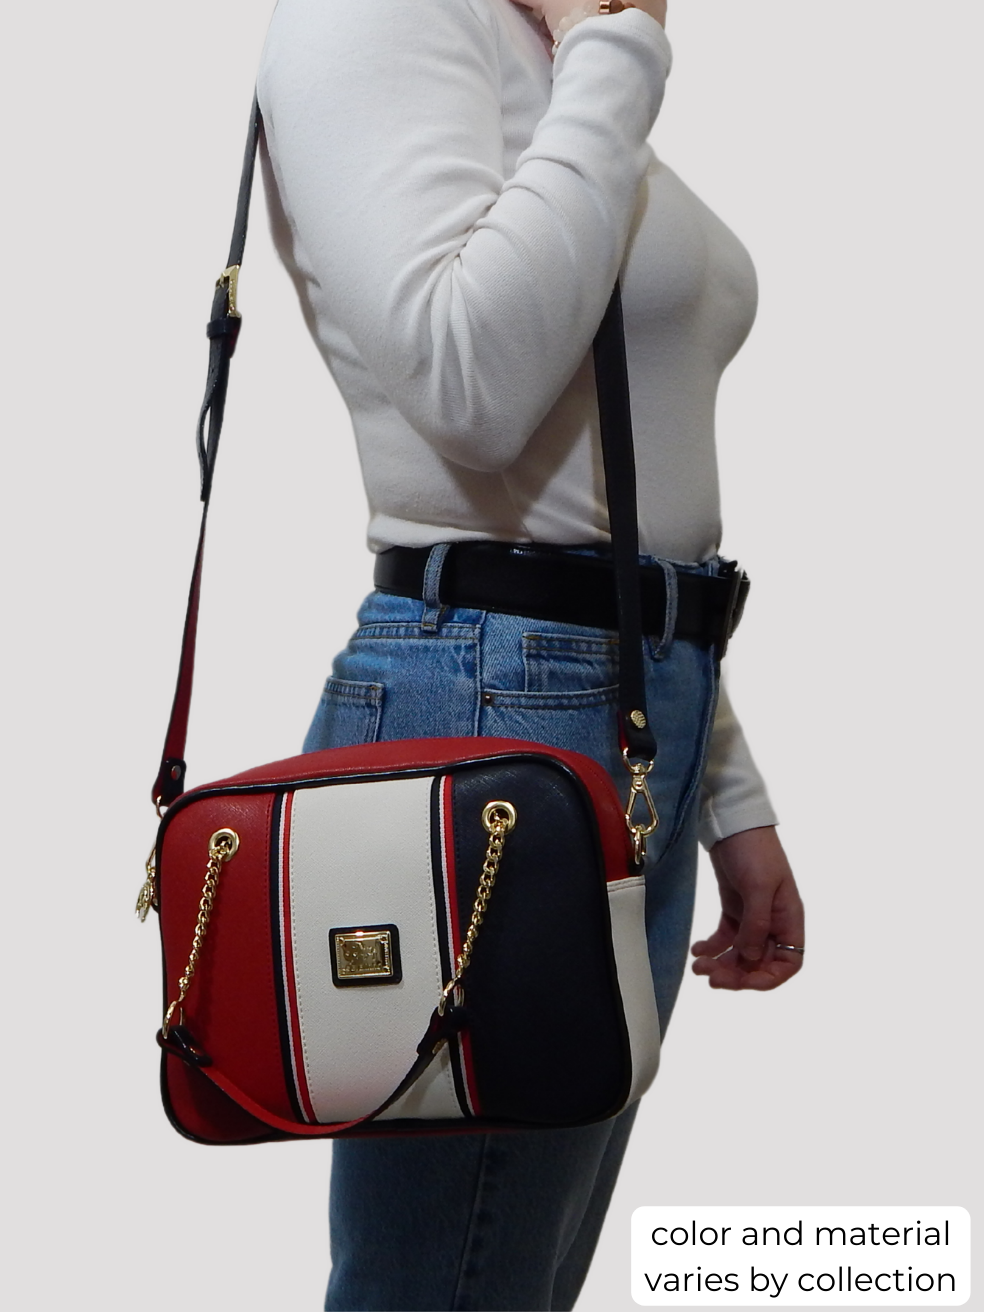 #color_ Red | Cavalinho Gallop Patent Leather Handbag - Red - bodyshot_0512_2_073f333d-daac-4549-831c-8b4655041be1